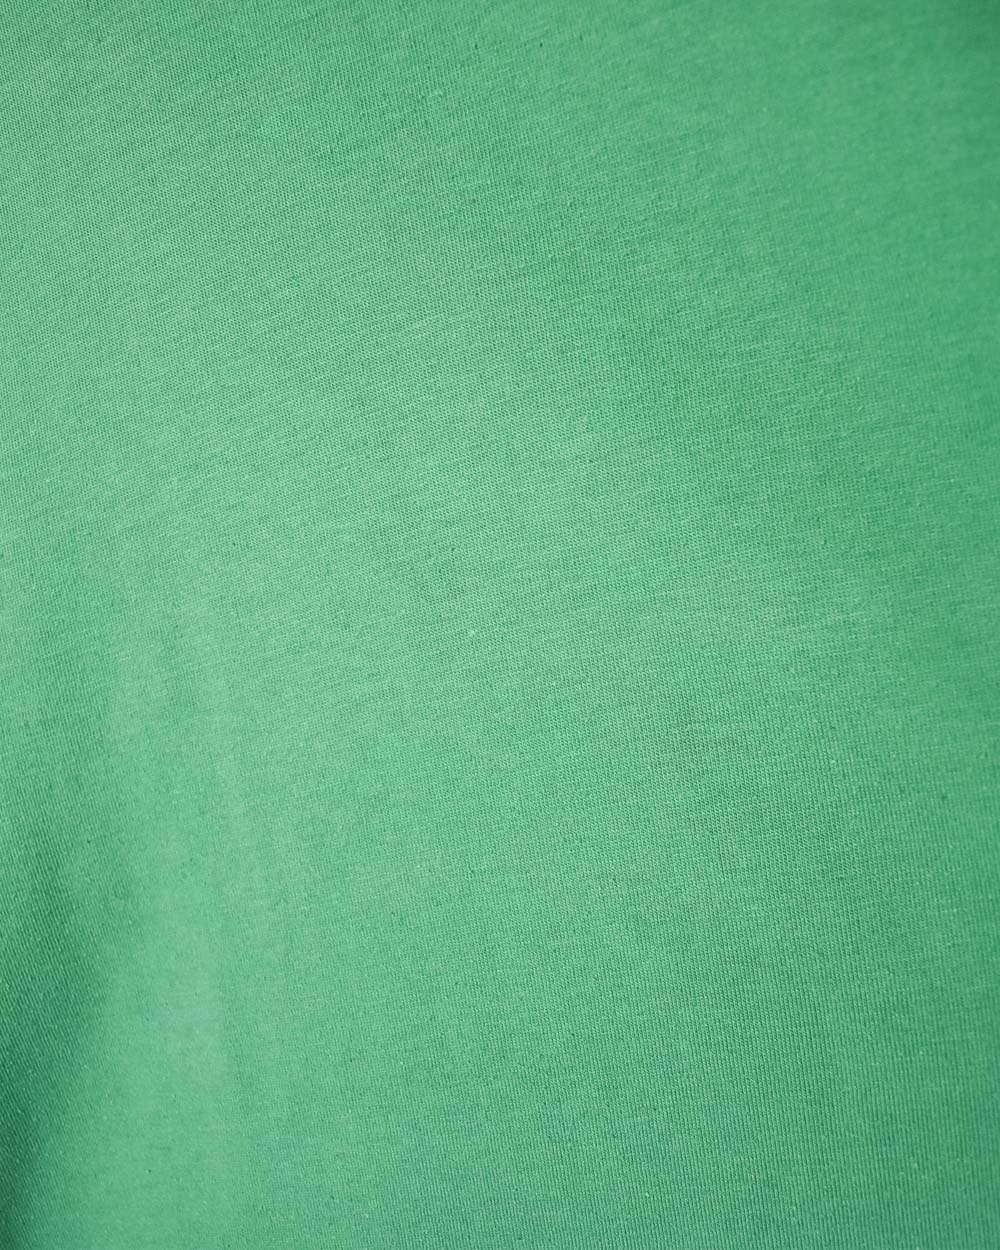 Green Adidas T-Shirt - Medium